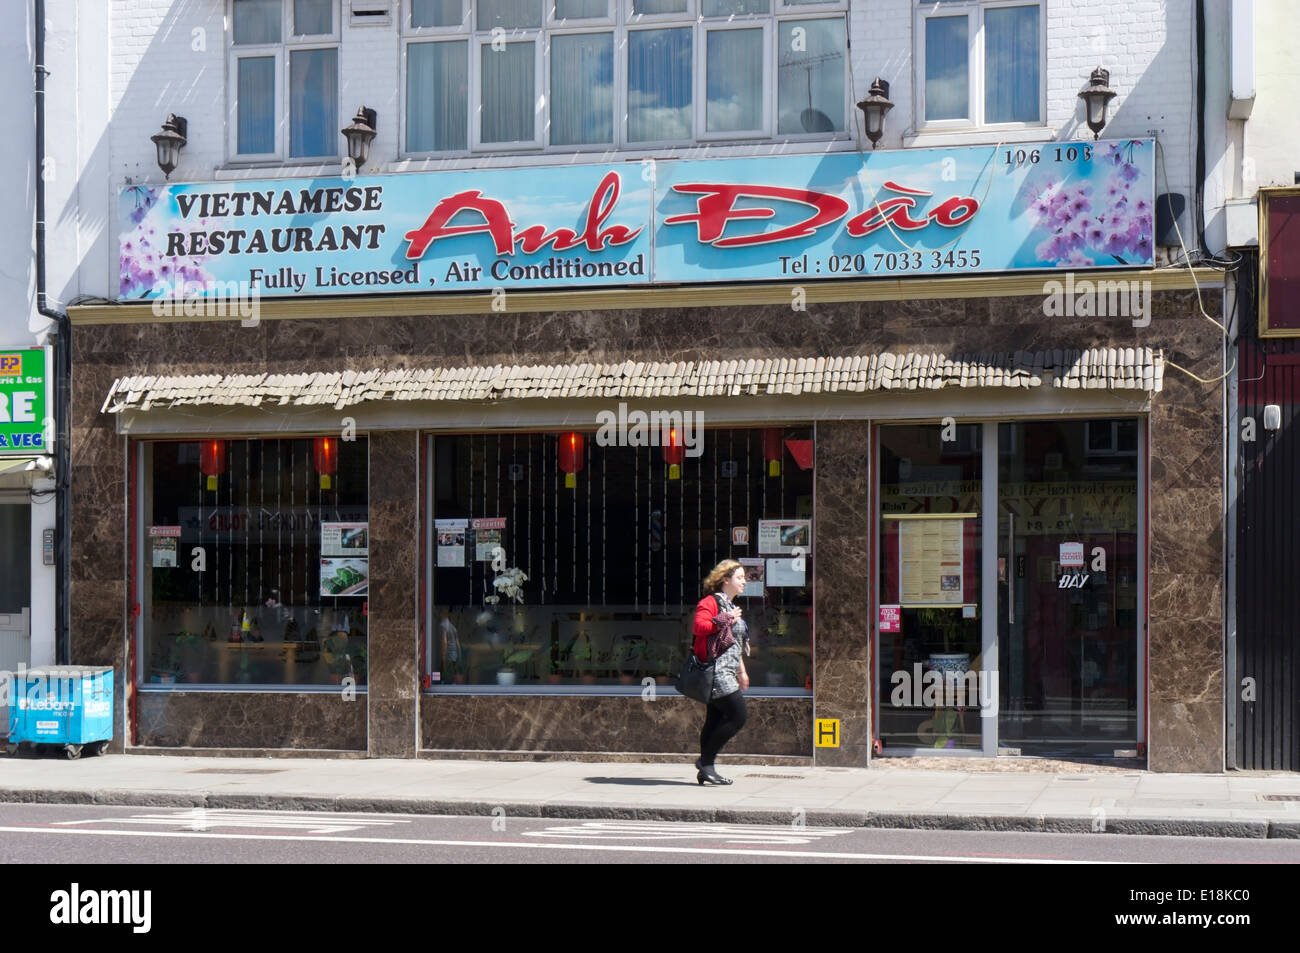 The Anh Dào Vietnamese restaurant in Kingsland Road, East London. Stock Photo